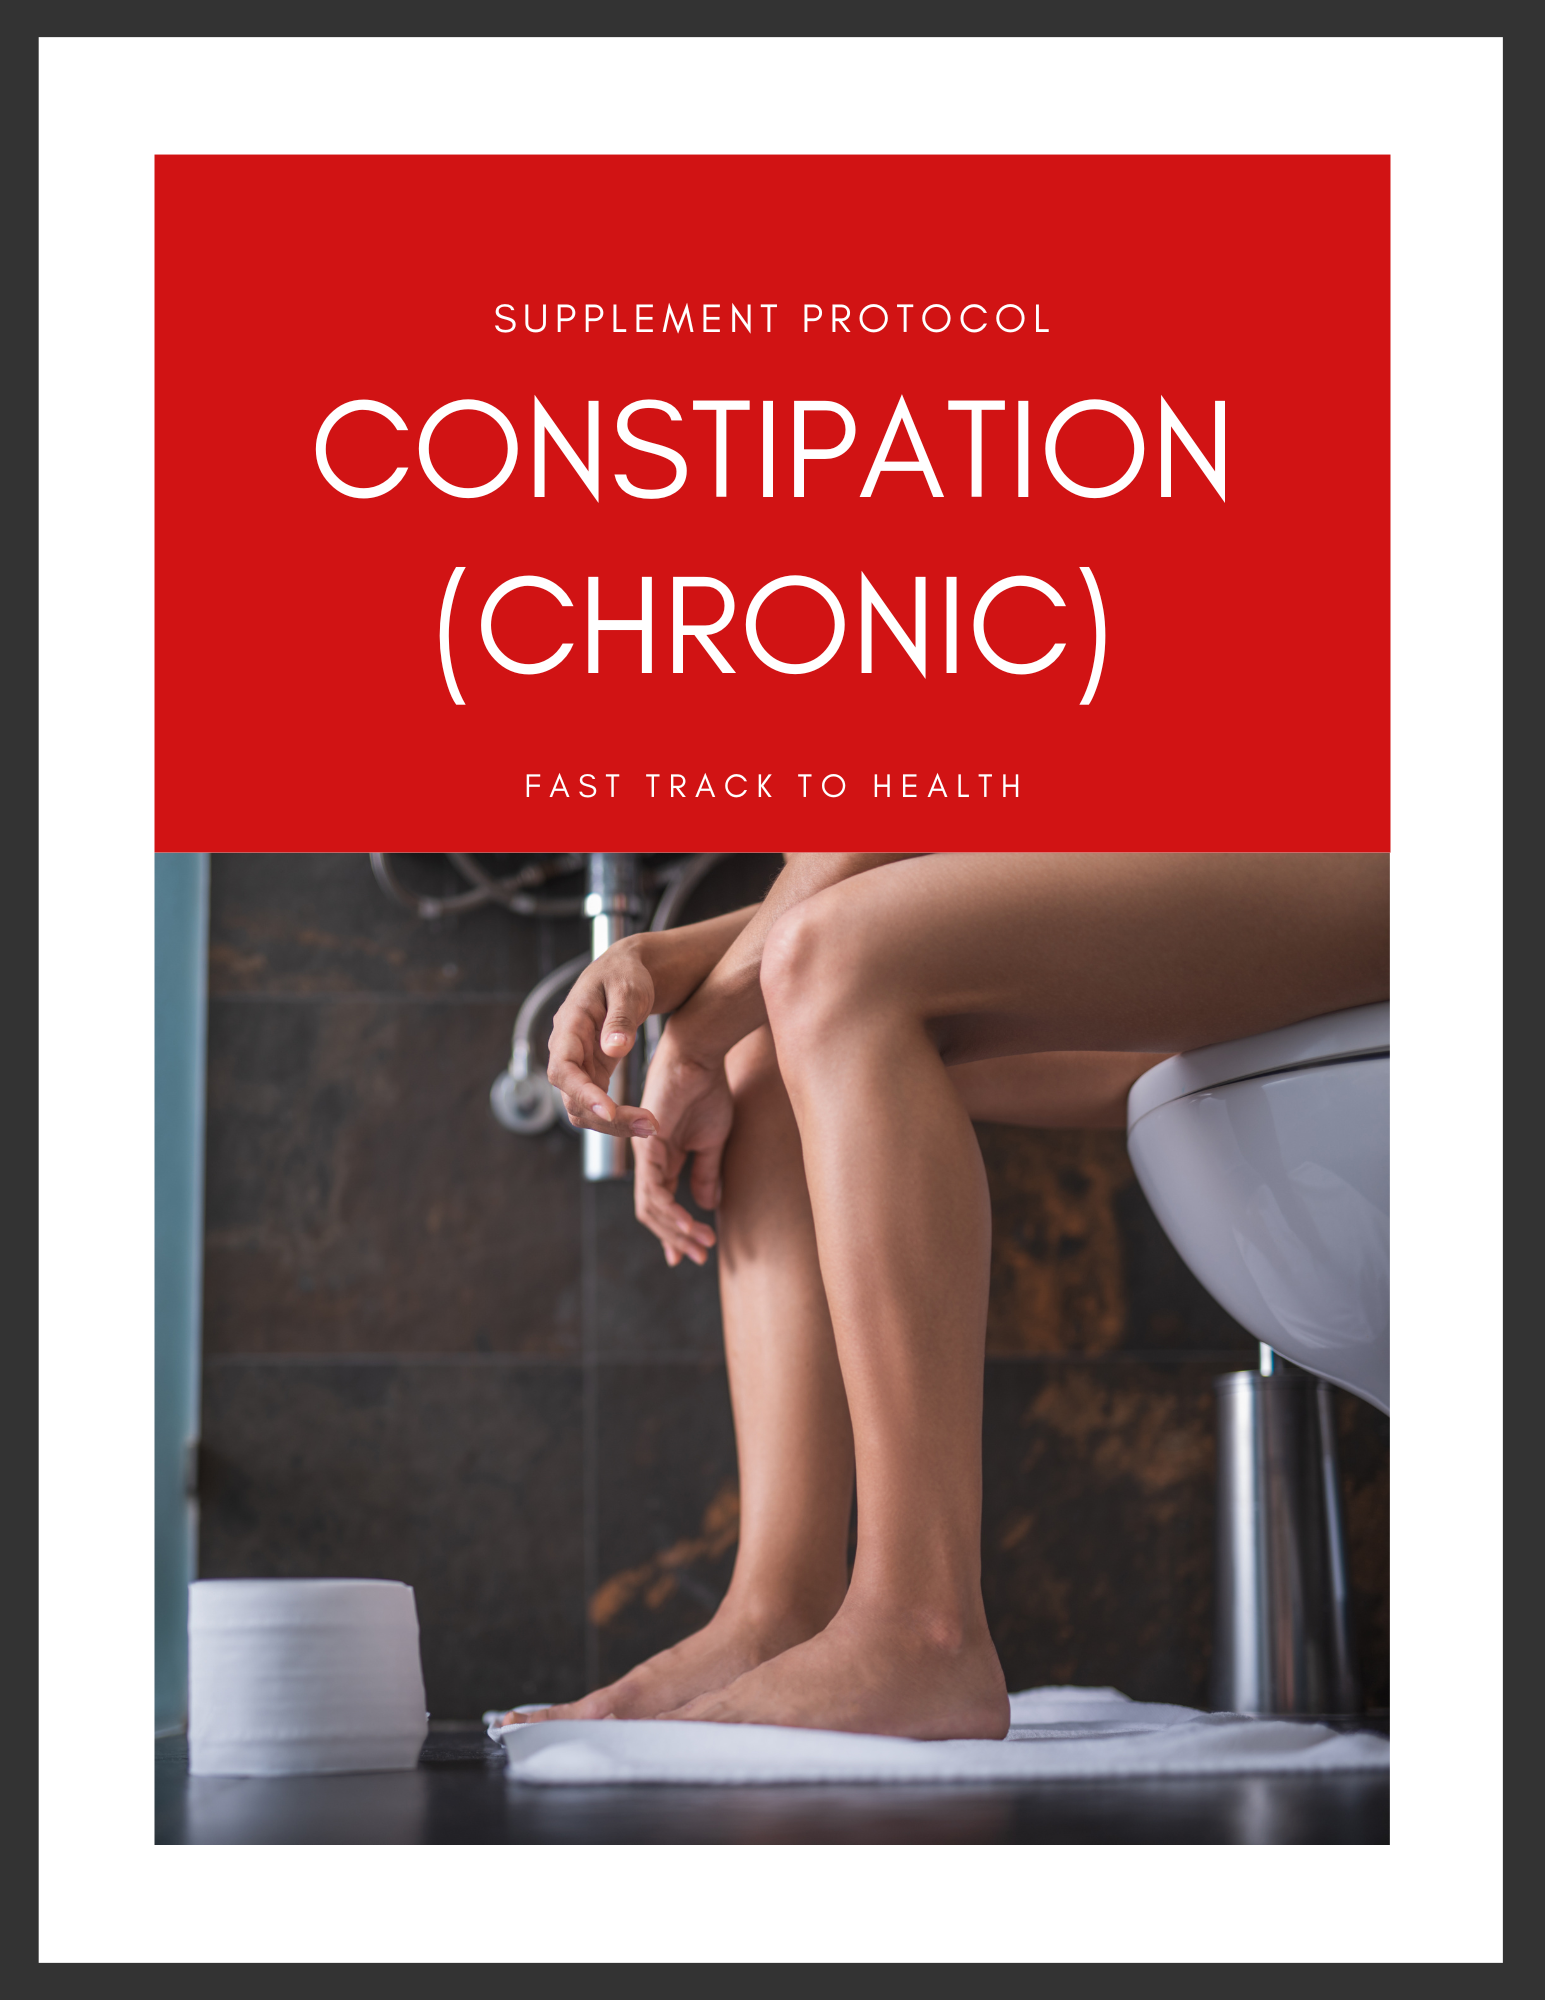 Chronic Constipation Protocol